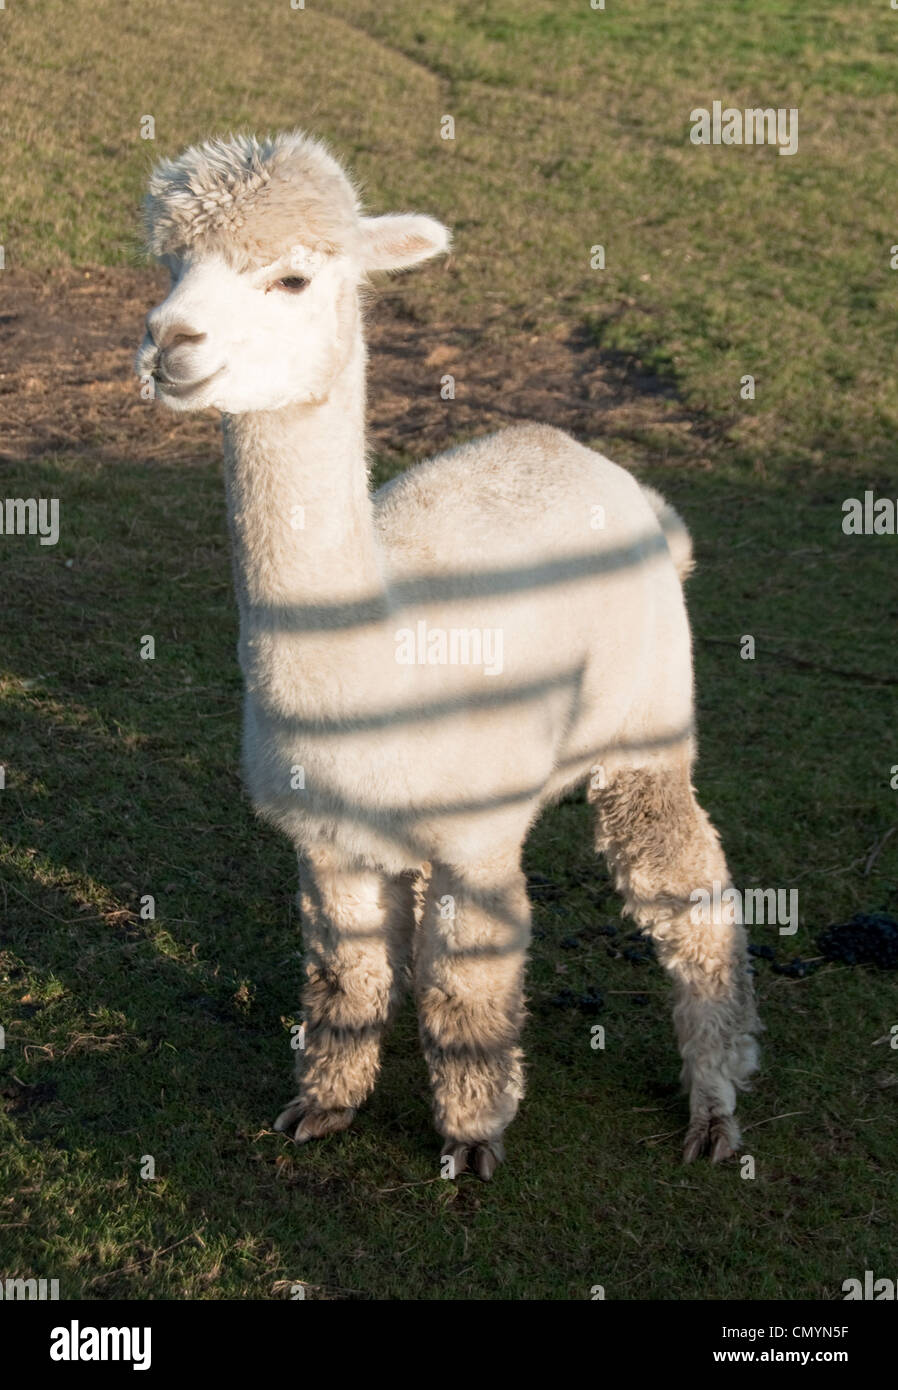 An Alpaca stands alone in an English farm field Stock Photo